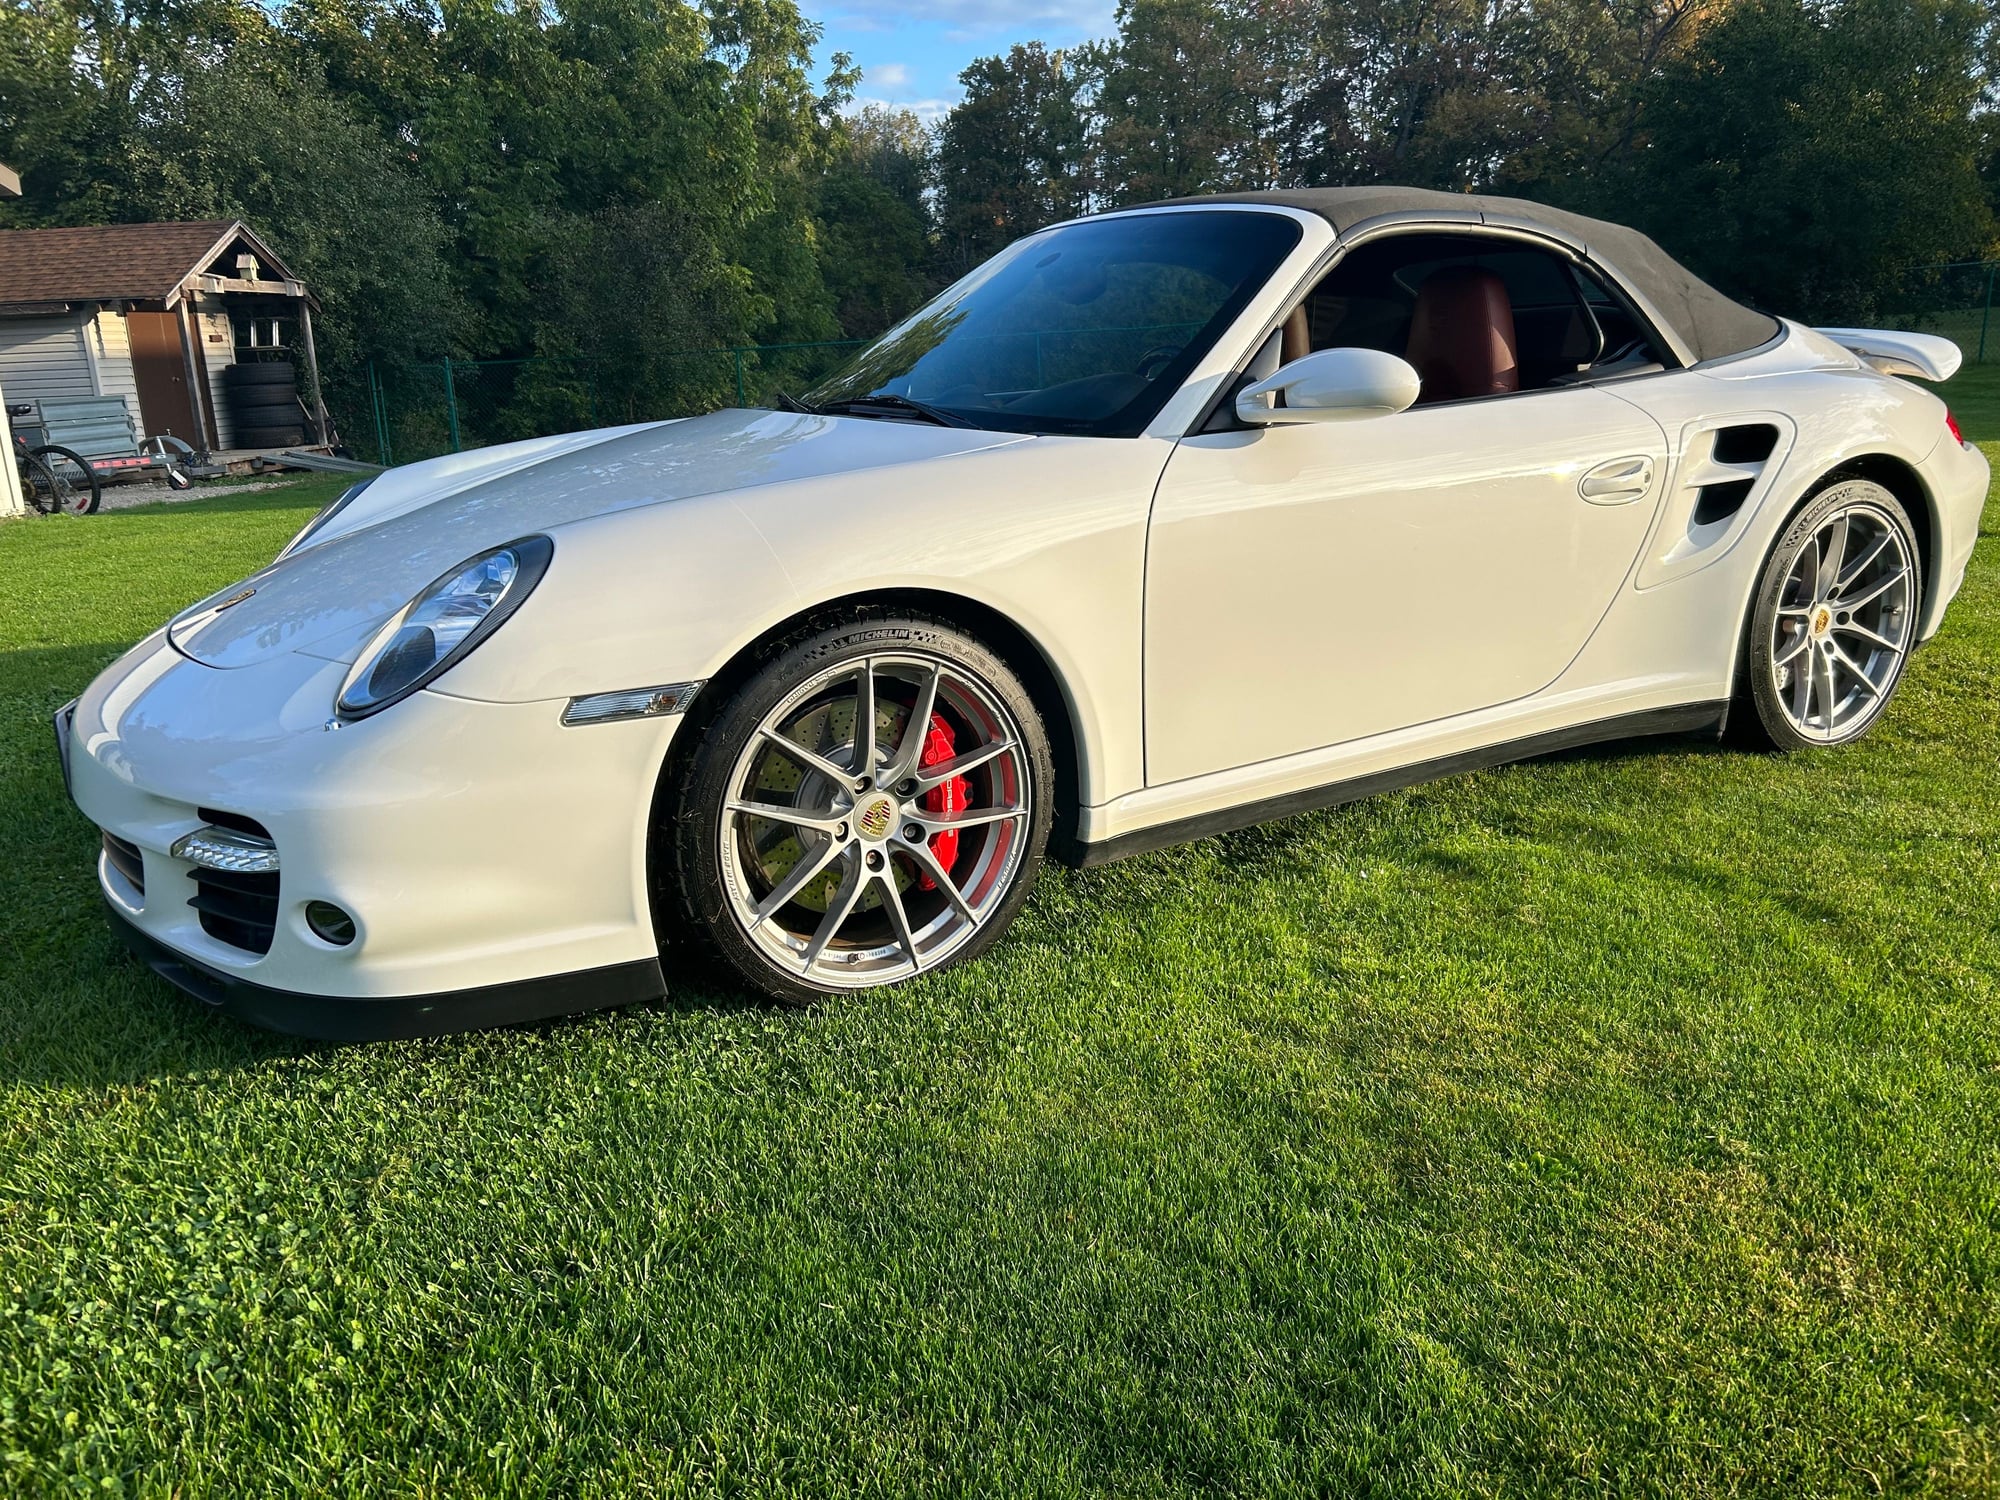 2008 Porsche 911 - 2008 997 TT Cab Manual - Used - VIN WP0CD29998S789554 - 46,340 Miles - 6 cyl - AWD - Manual - Convertible - White - Niagara Falls, NY 14001, United States